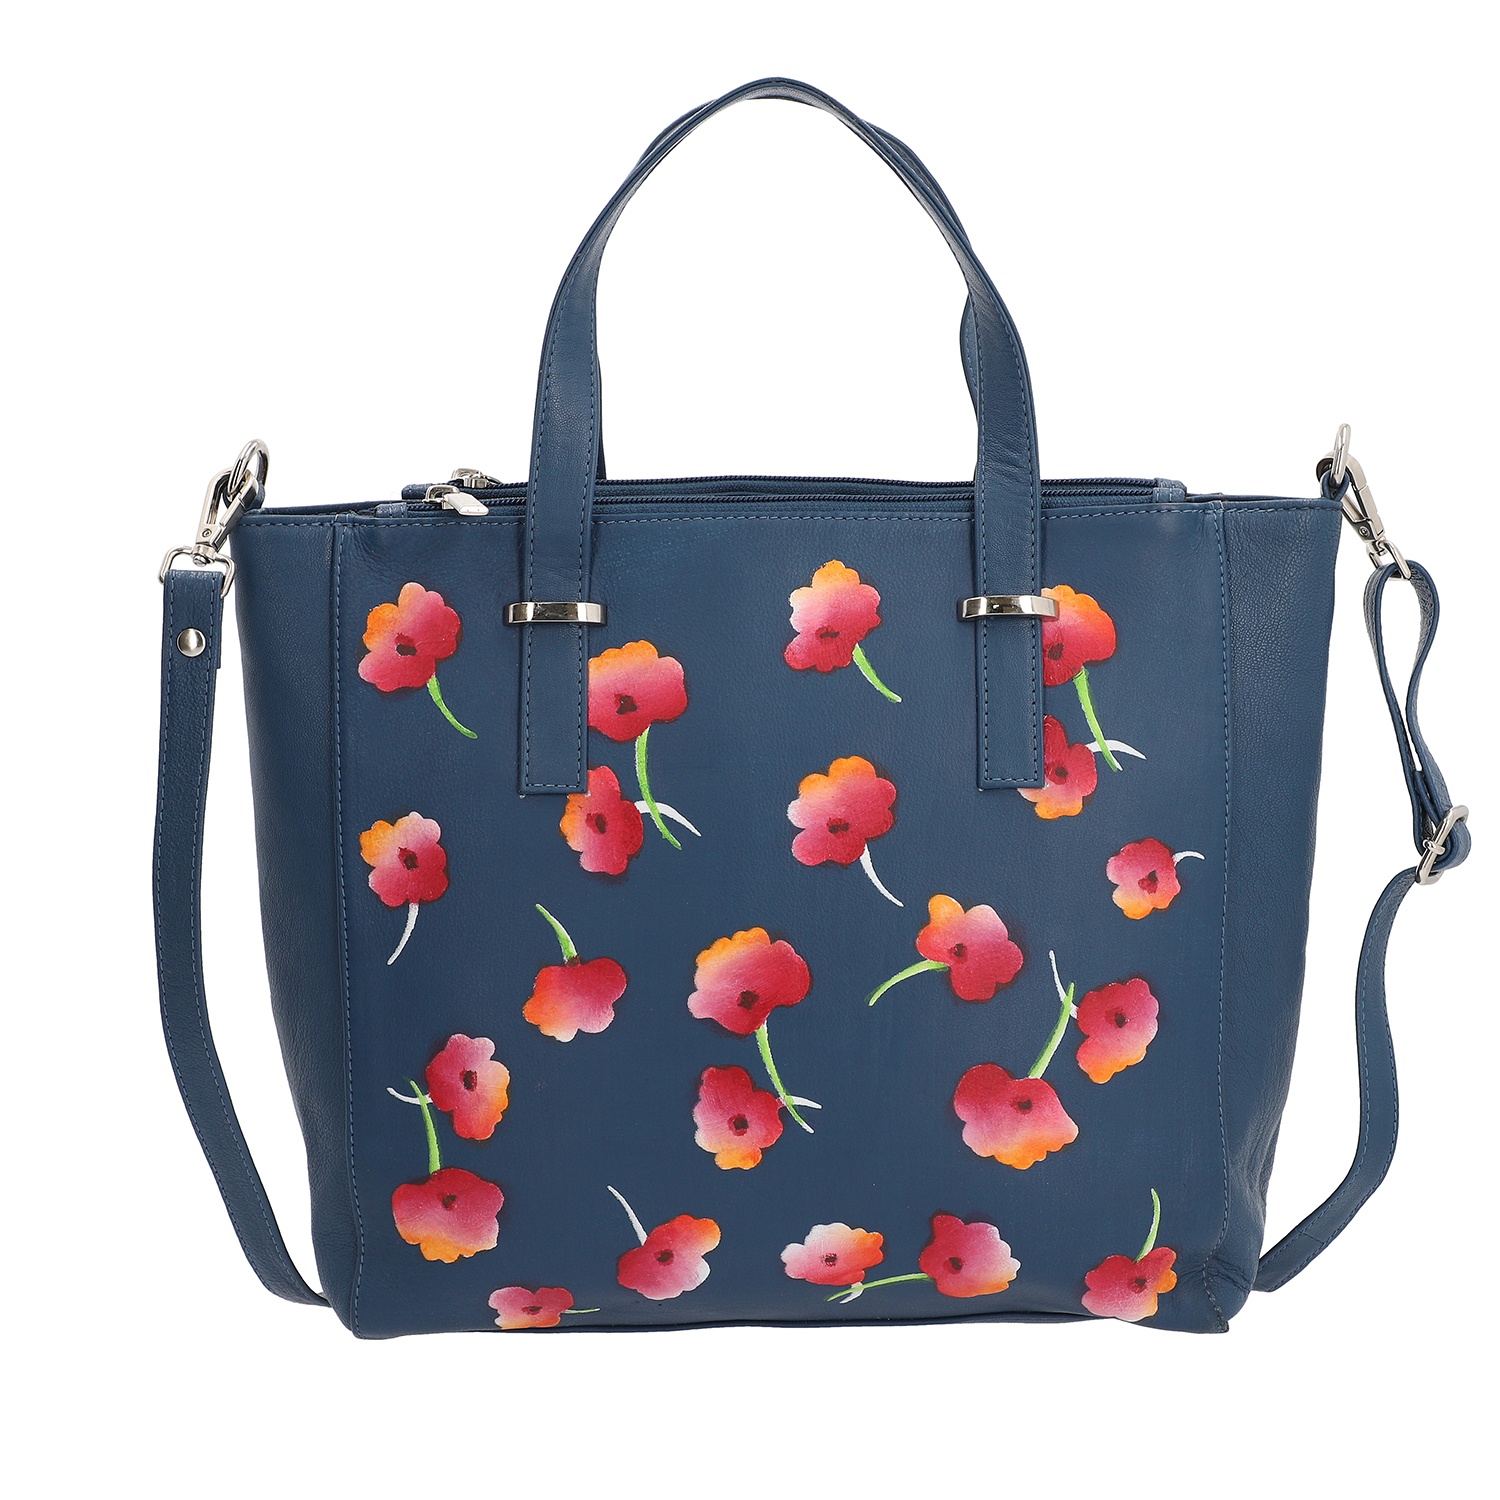 SUKRITI 100% Genuine Leather Poppy Tote Bag with Adjustable Shoulder Strap (Size 28x8x28cm) - Blue